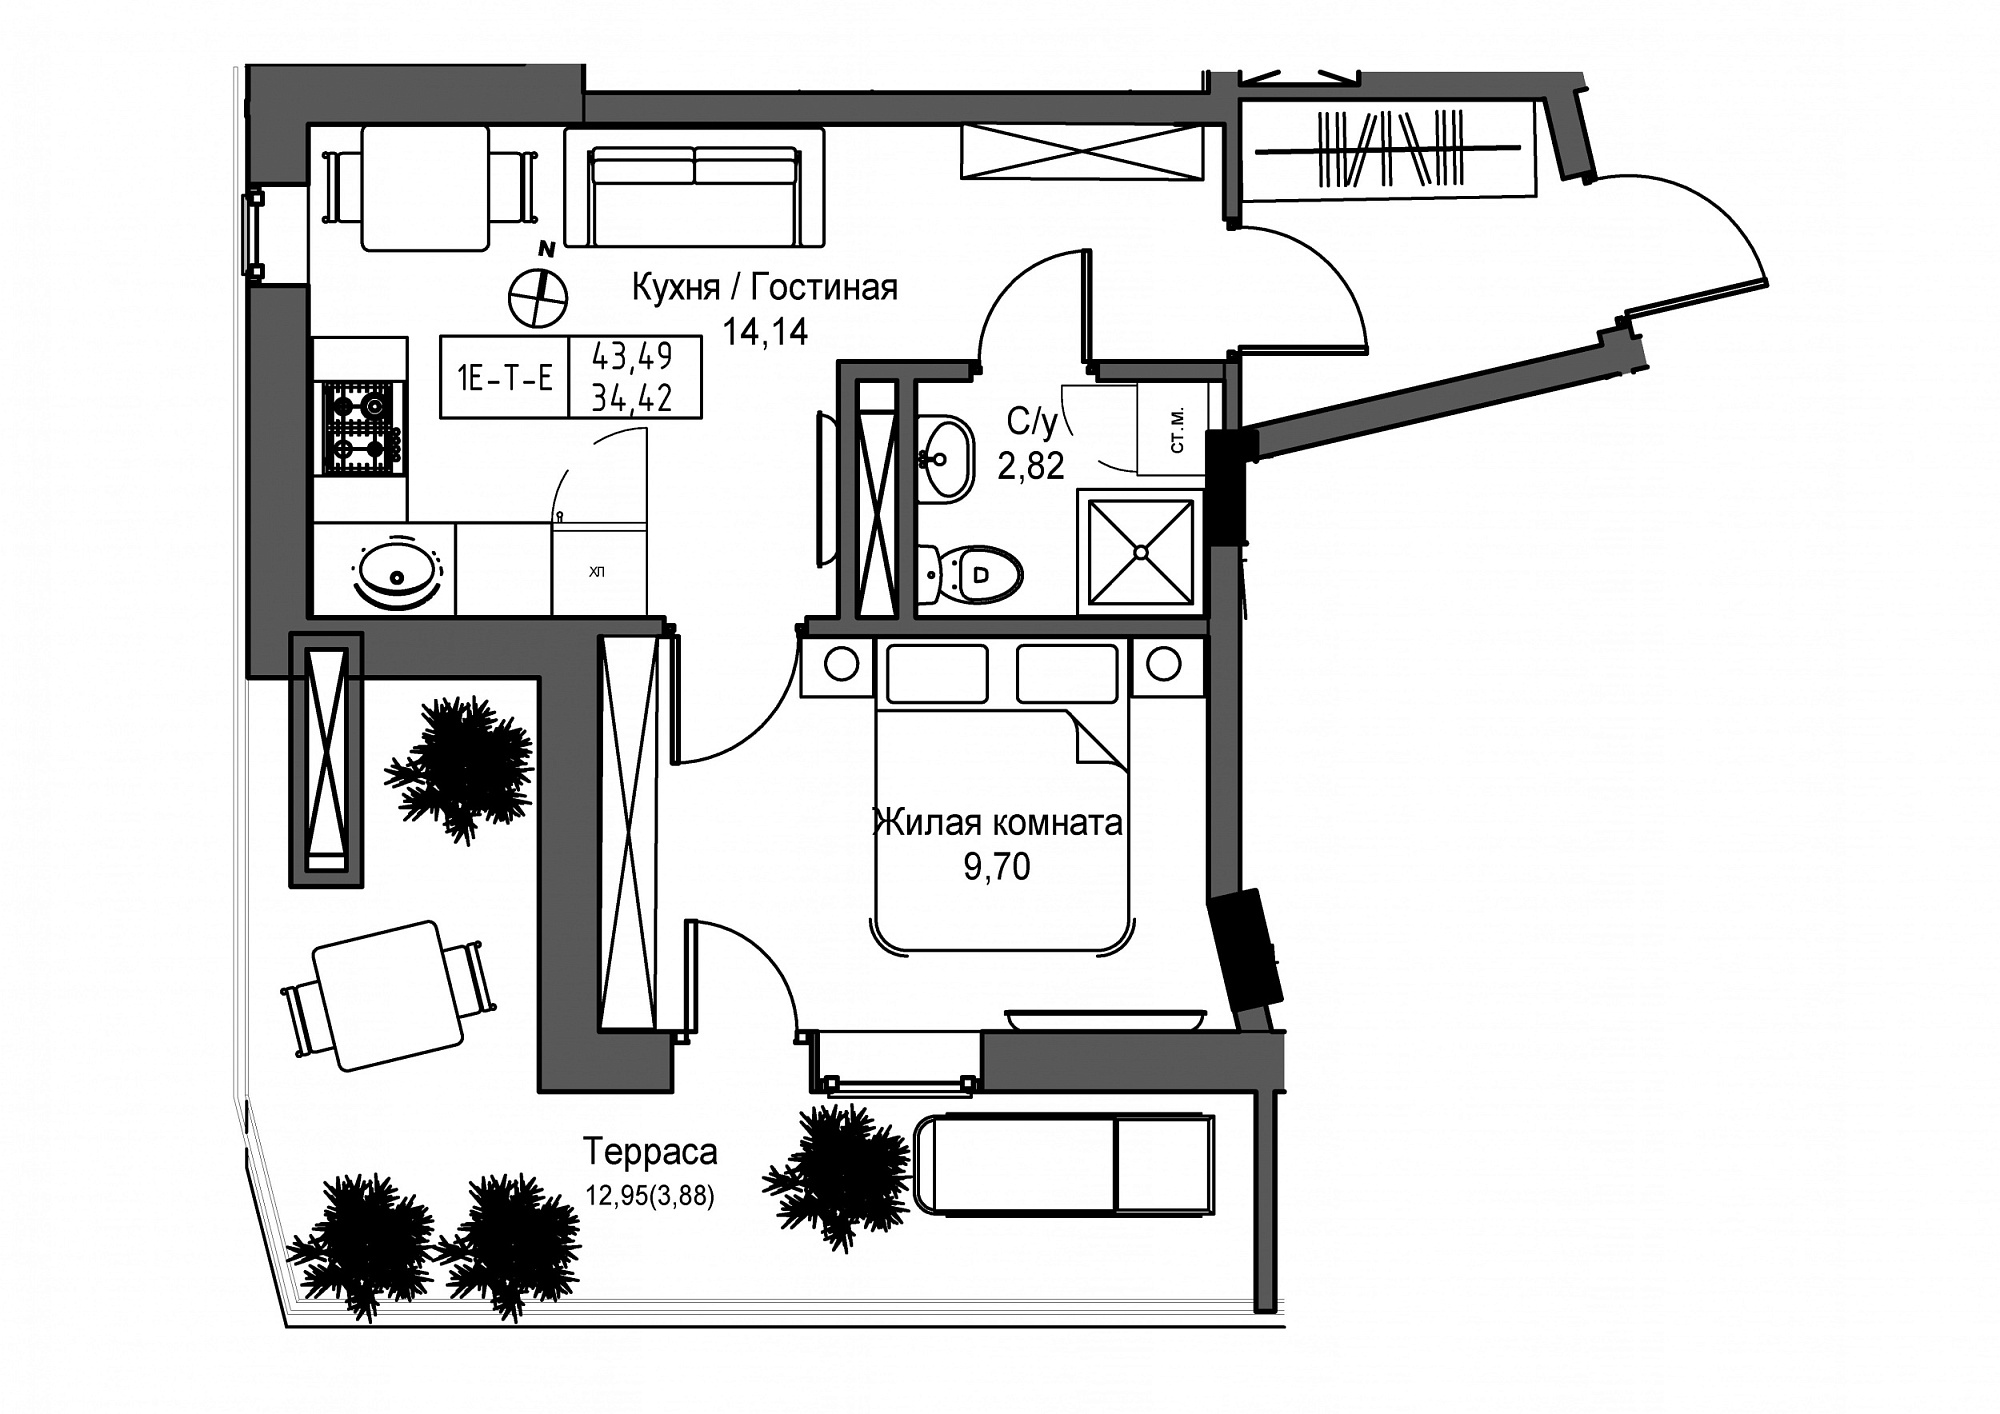 Планування 1-к квартира площею 34.42м2, UM-004-09/0014.